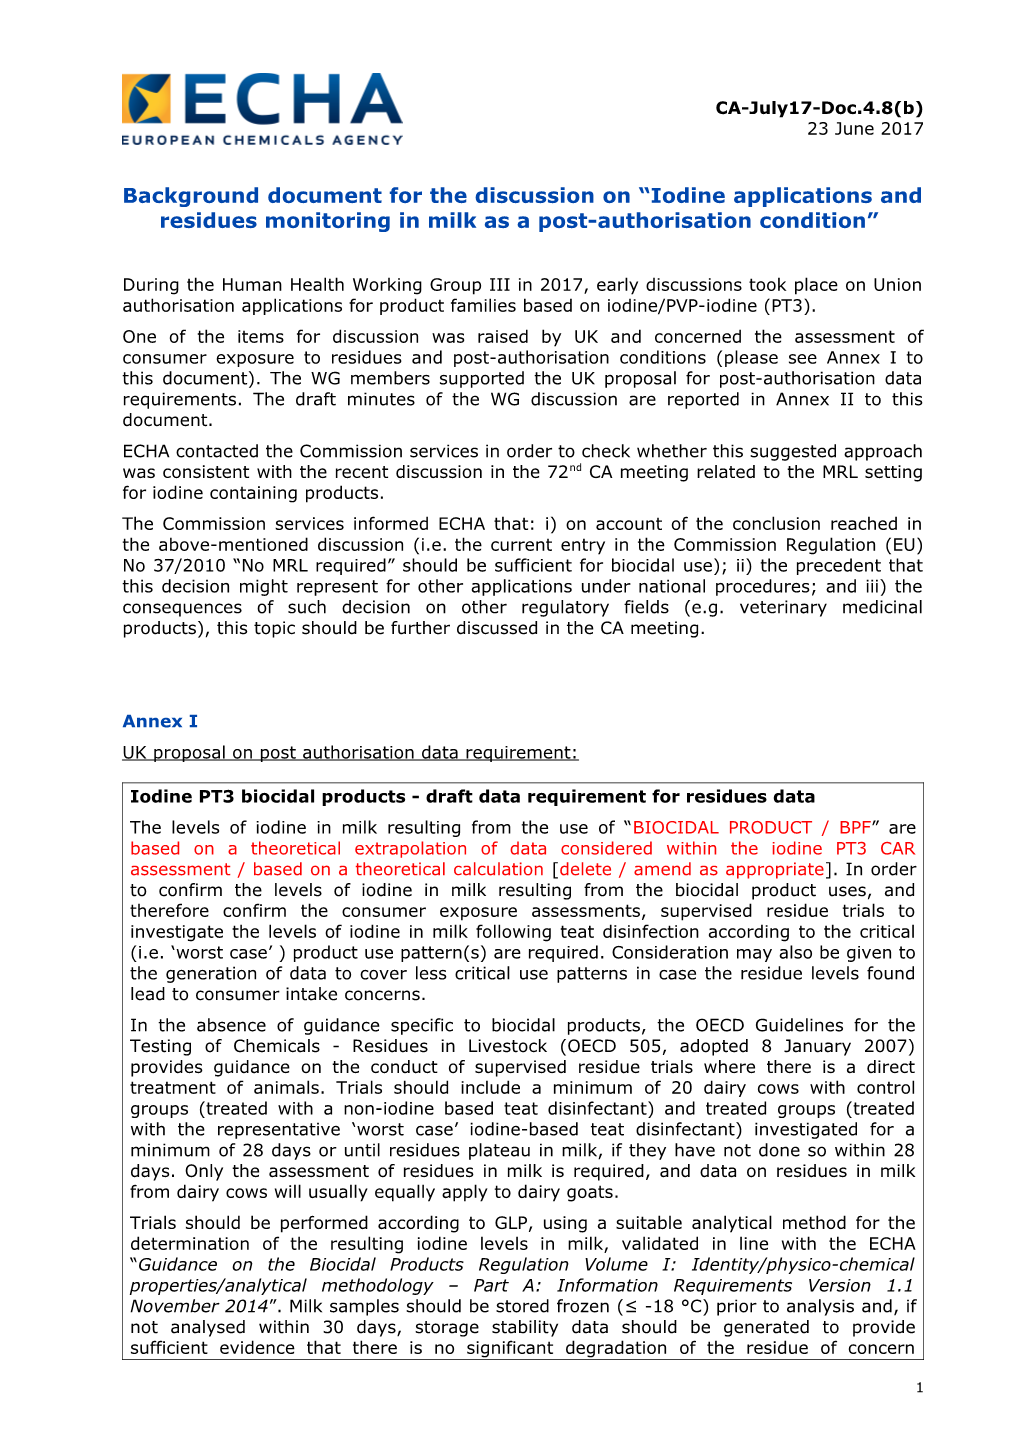 Background Document on Iodine Based UA Post-Authorisation Conditions